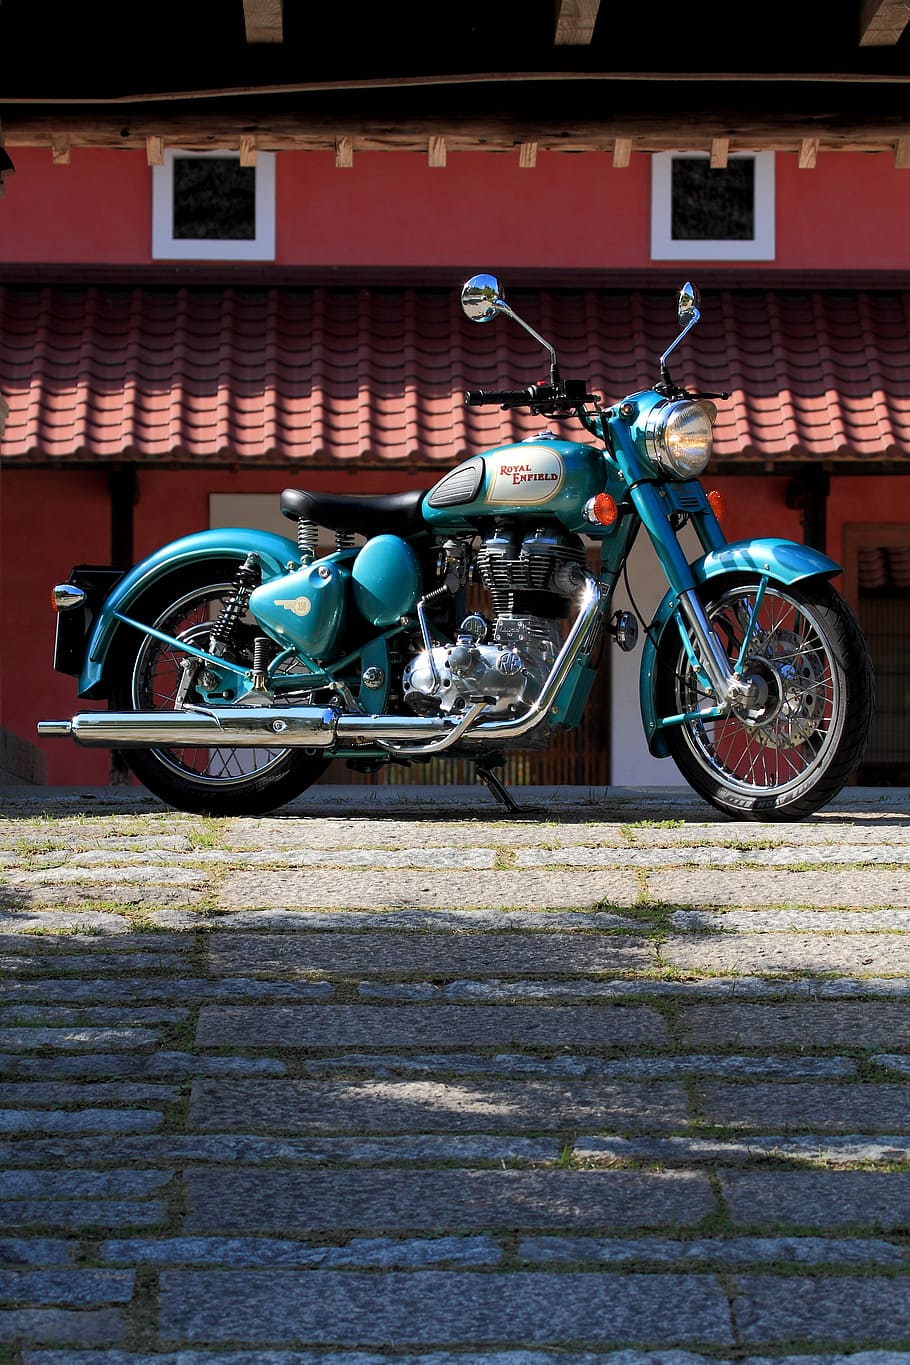 parked blue and black cruiser motorcycle, bike, vehicle, retro